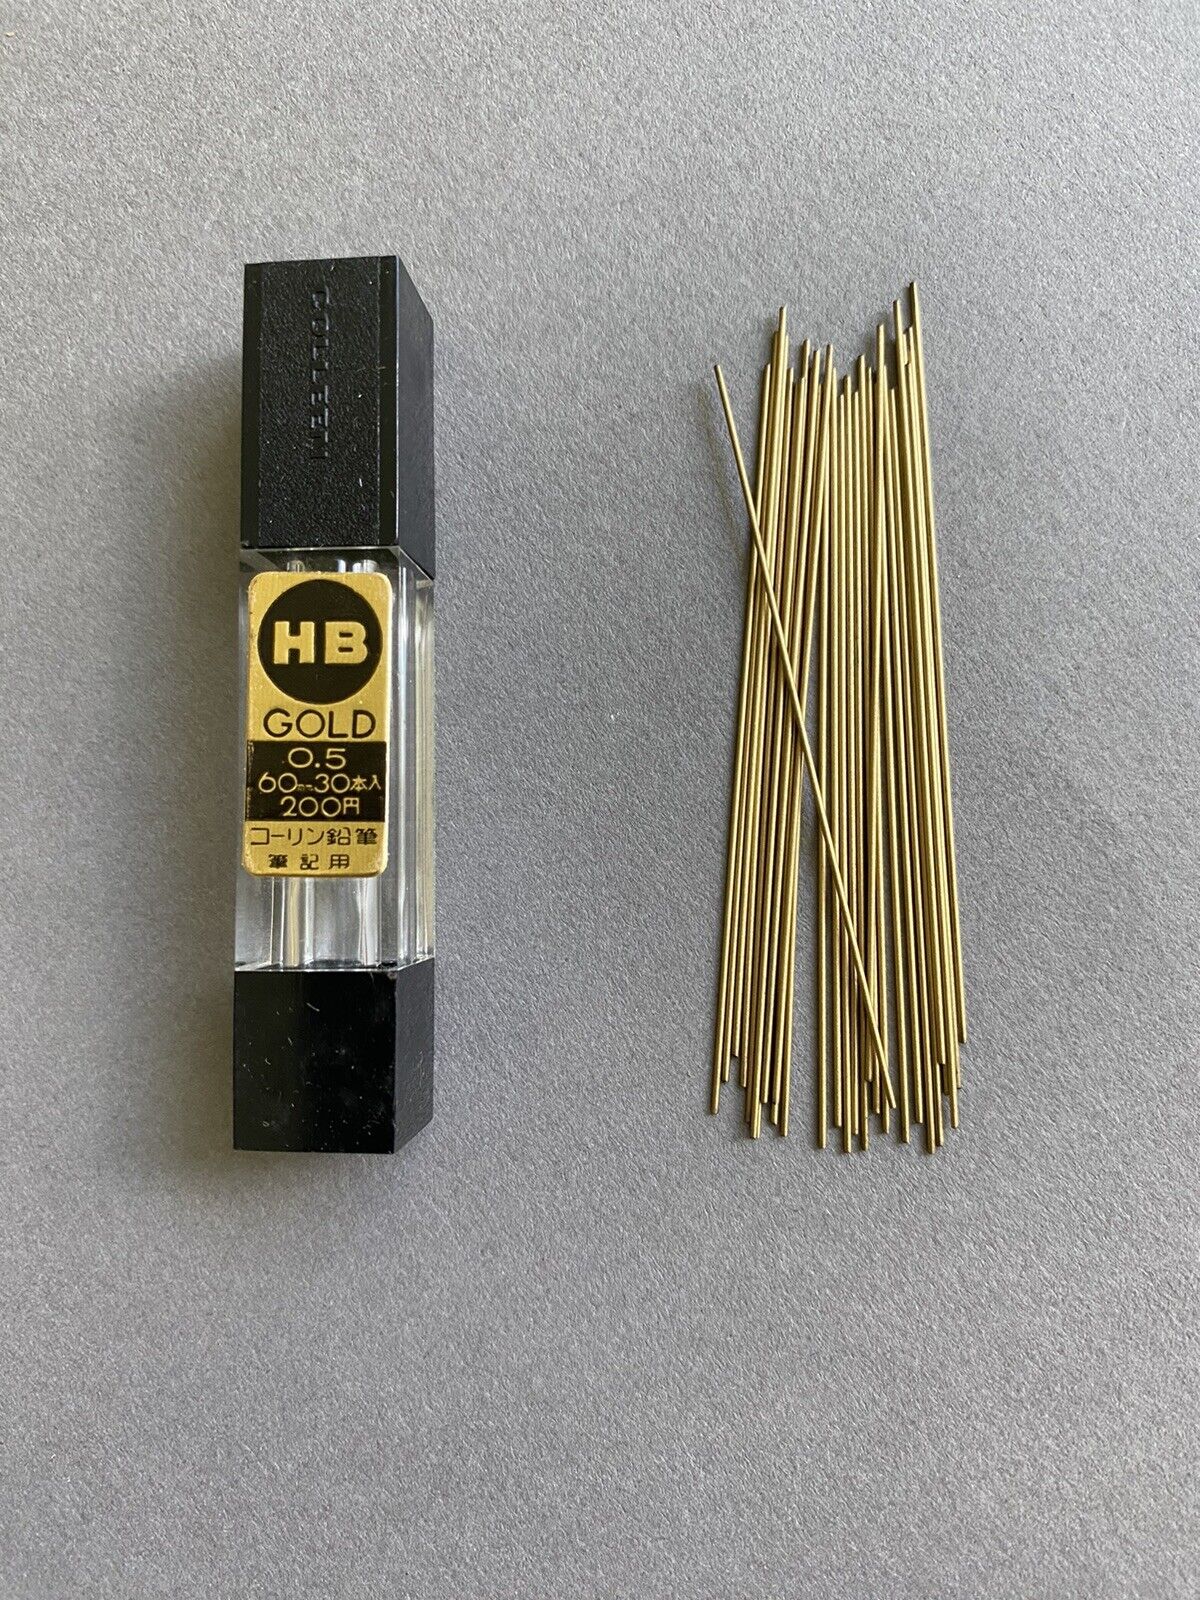 RARE Box Vintage Japanese GOLD Pencil Lead Coleen HB NOS 0.5 30 leads JIS